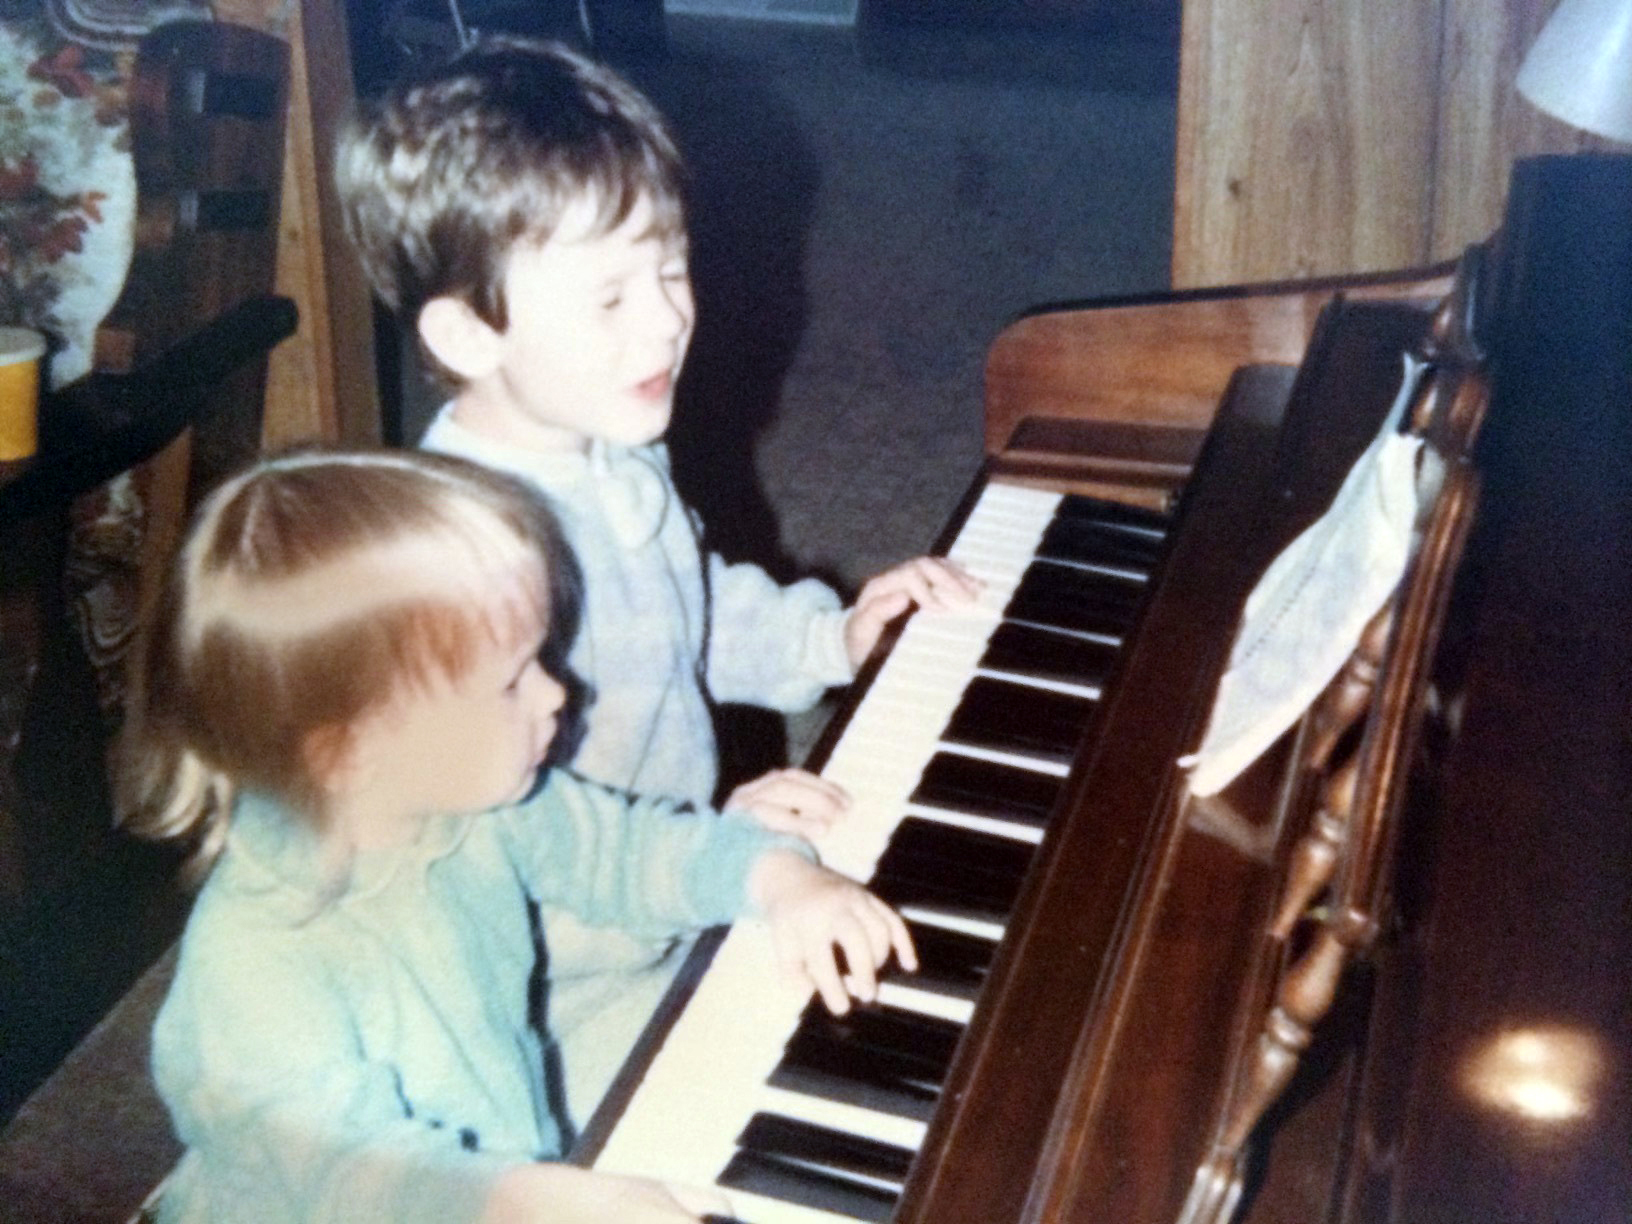 Matthew Lovegood, top, plays the piano as a child. Photo courtesy Lovegood